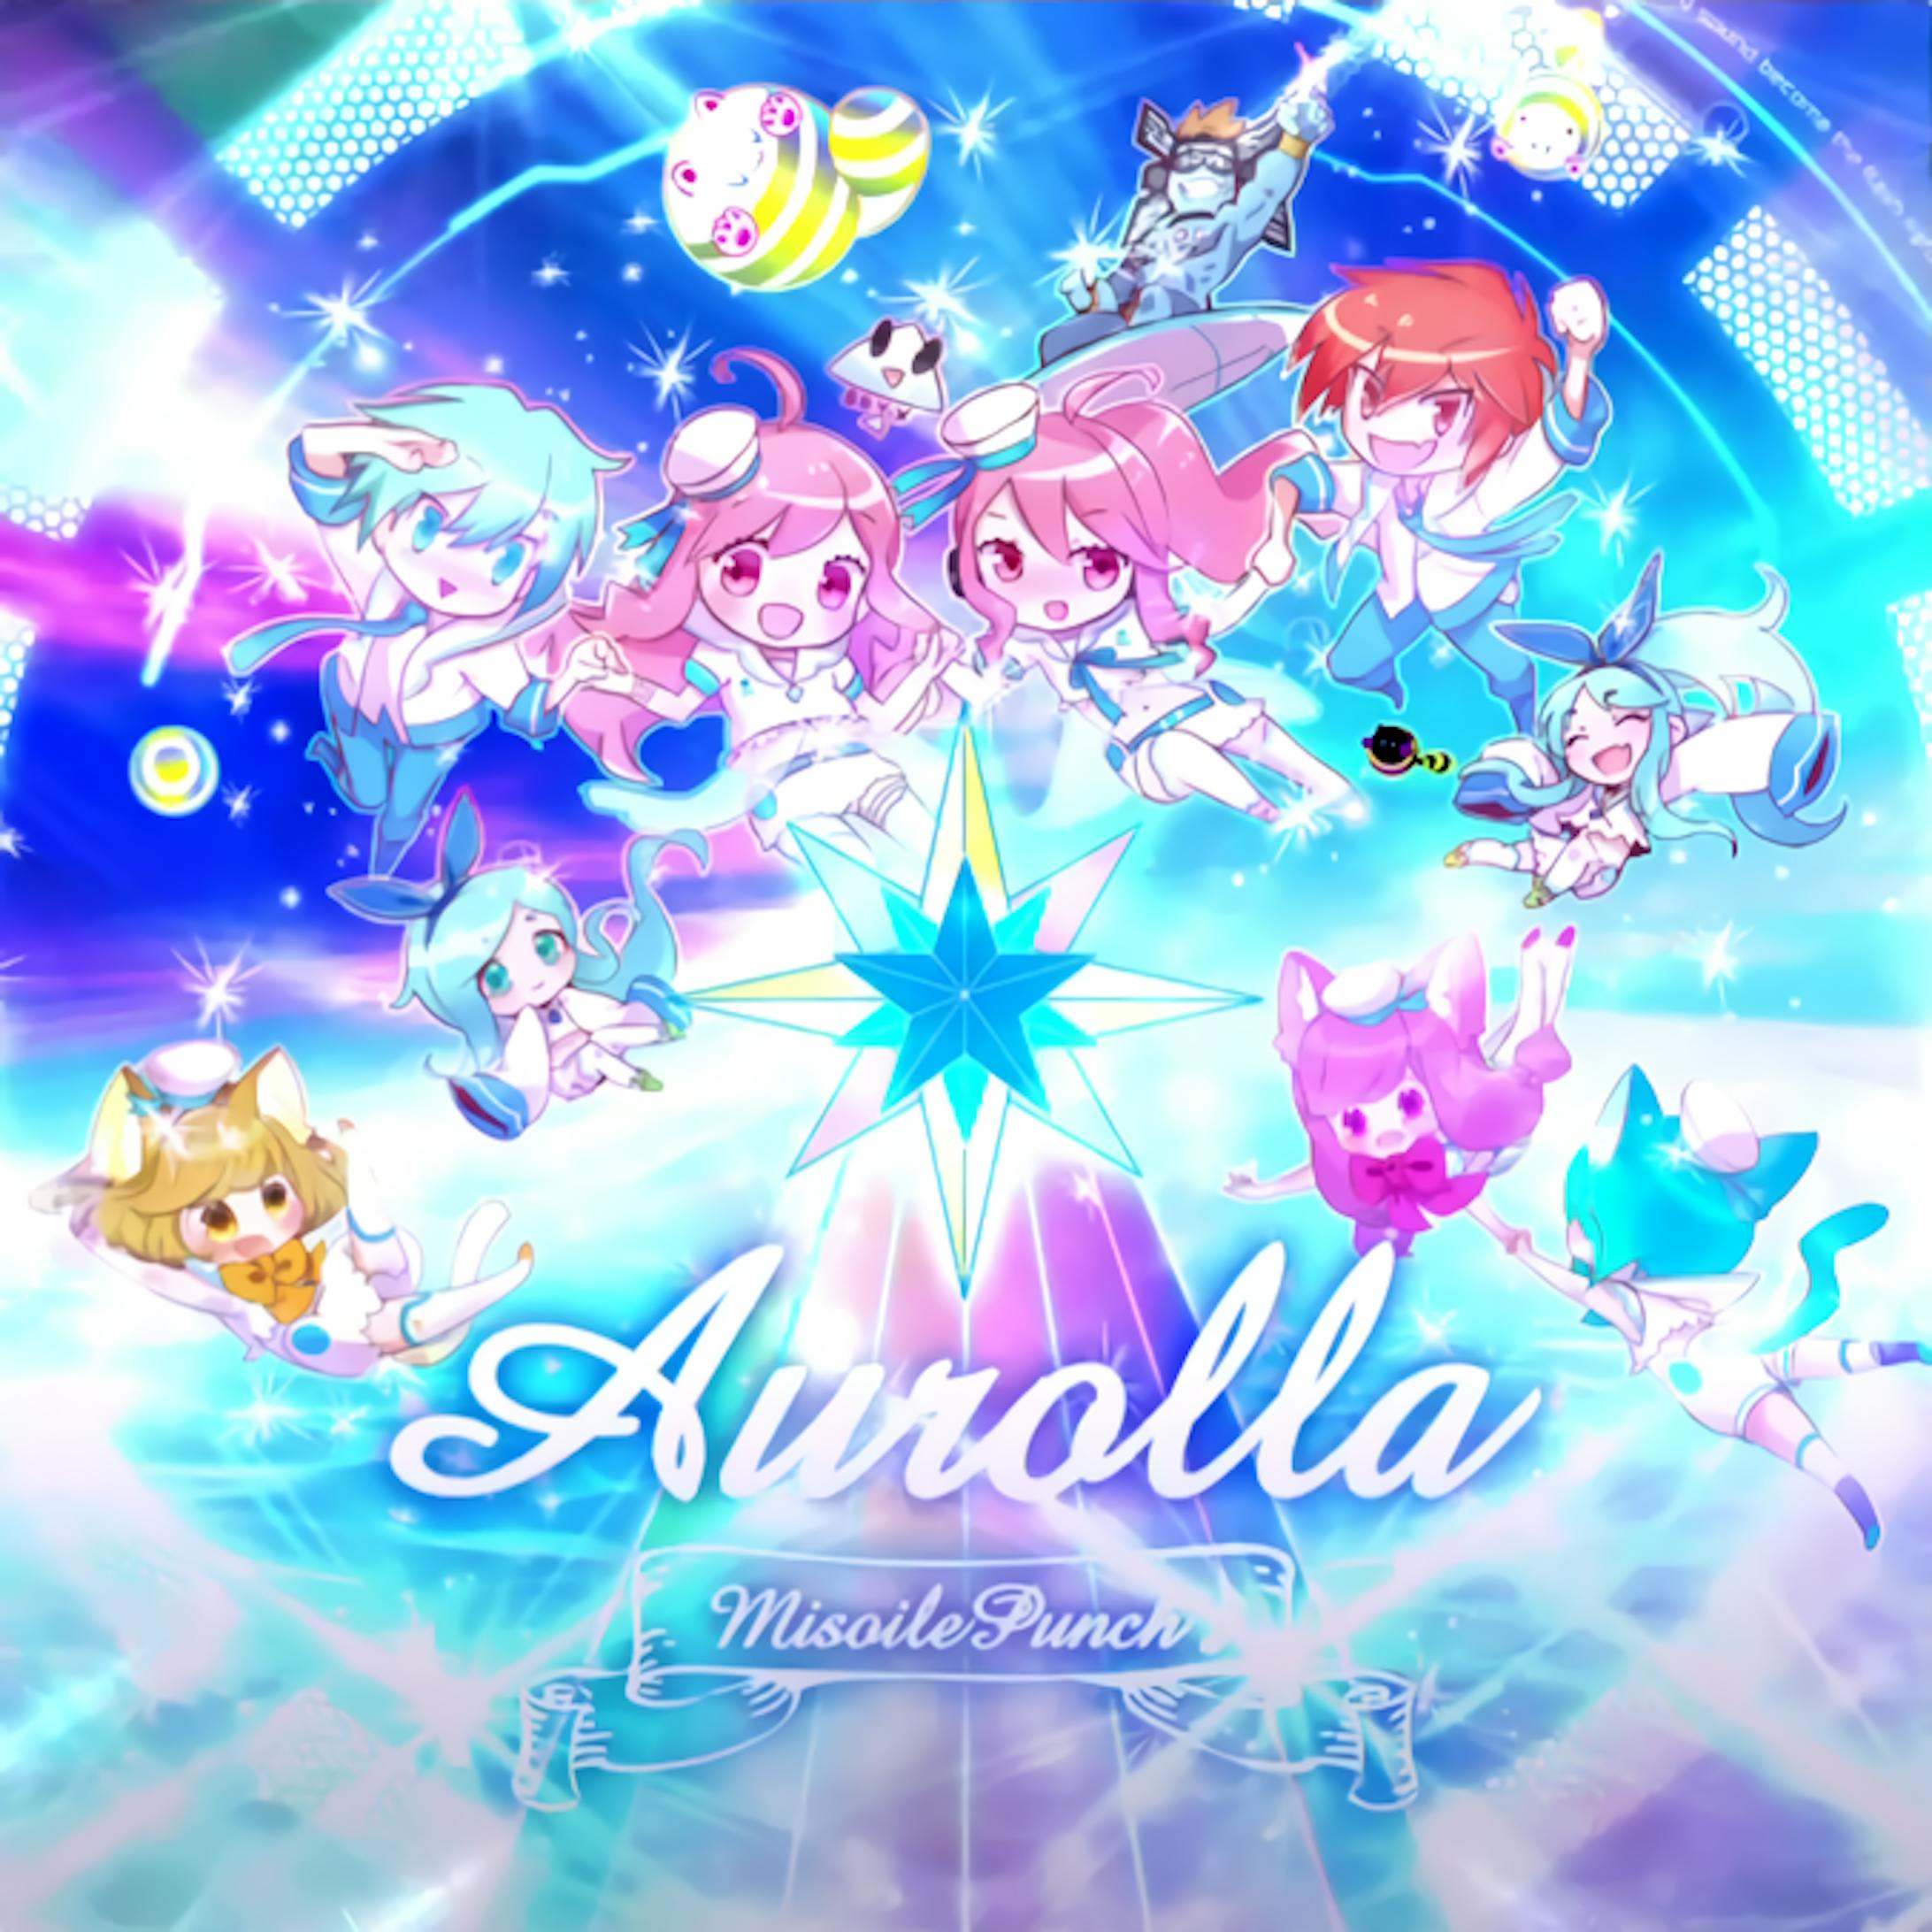 【SDVX】Aurolla / MisoilePunch♪ -1